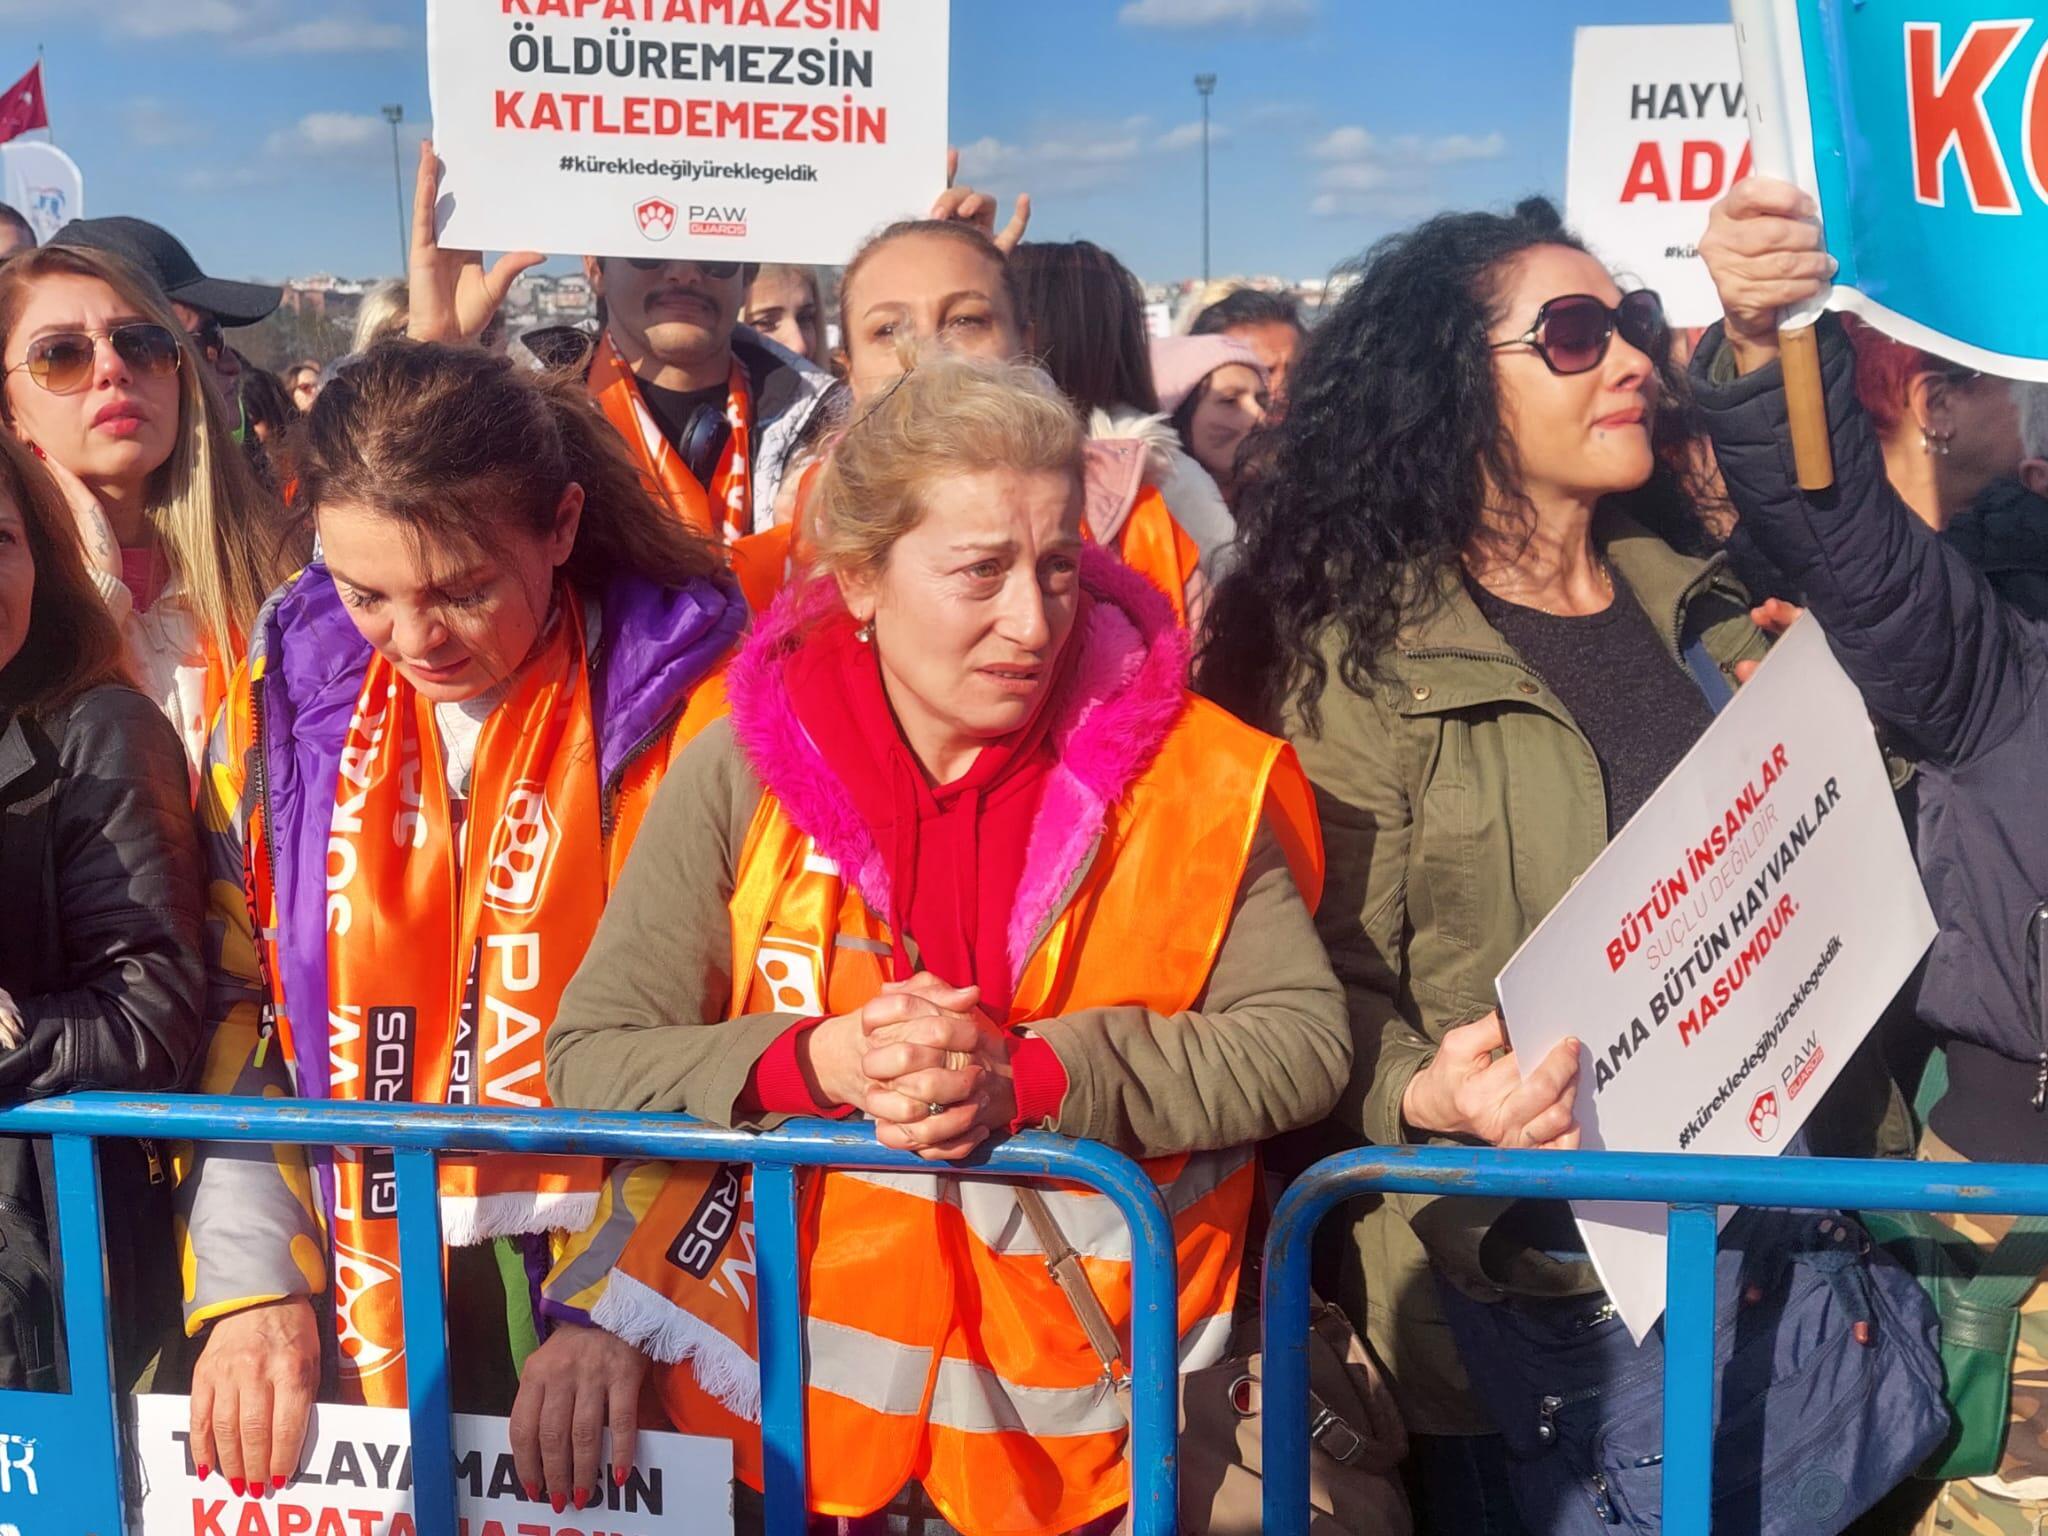 Animal rights activists hold rally in Istanbul - Türkiye News